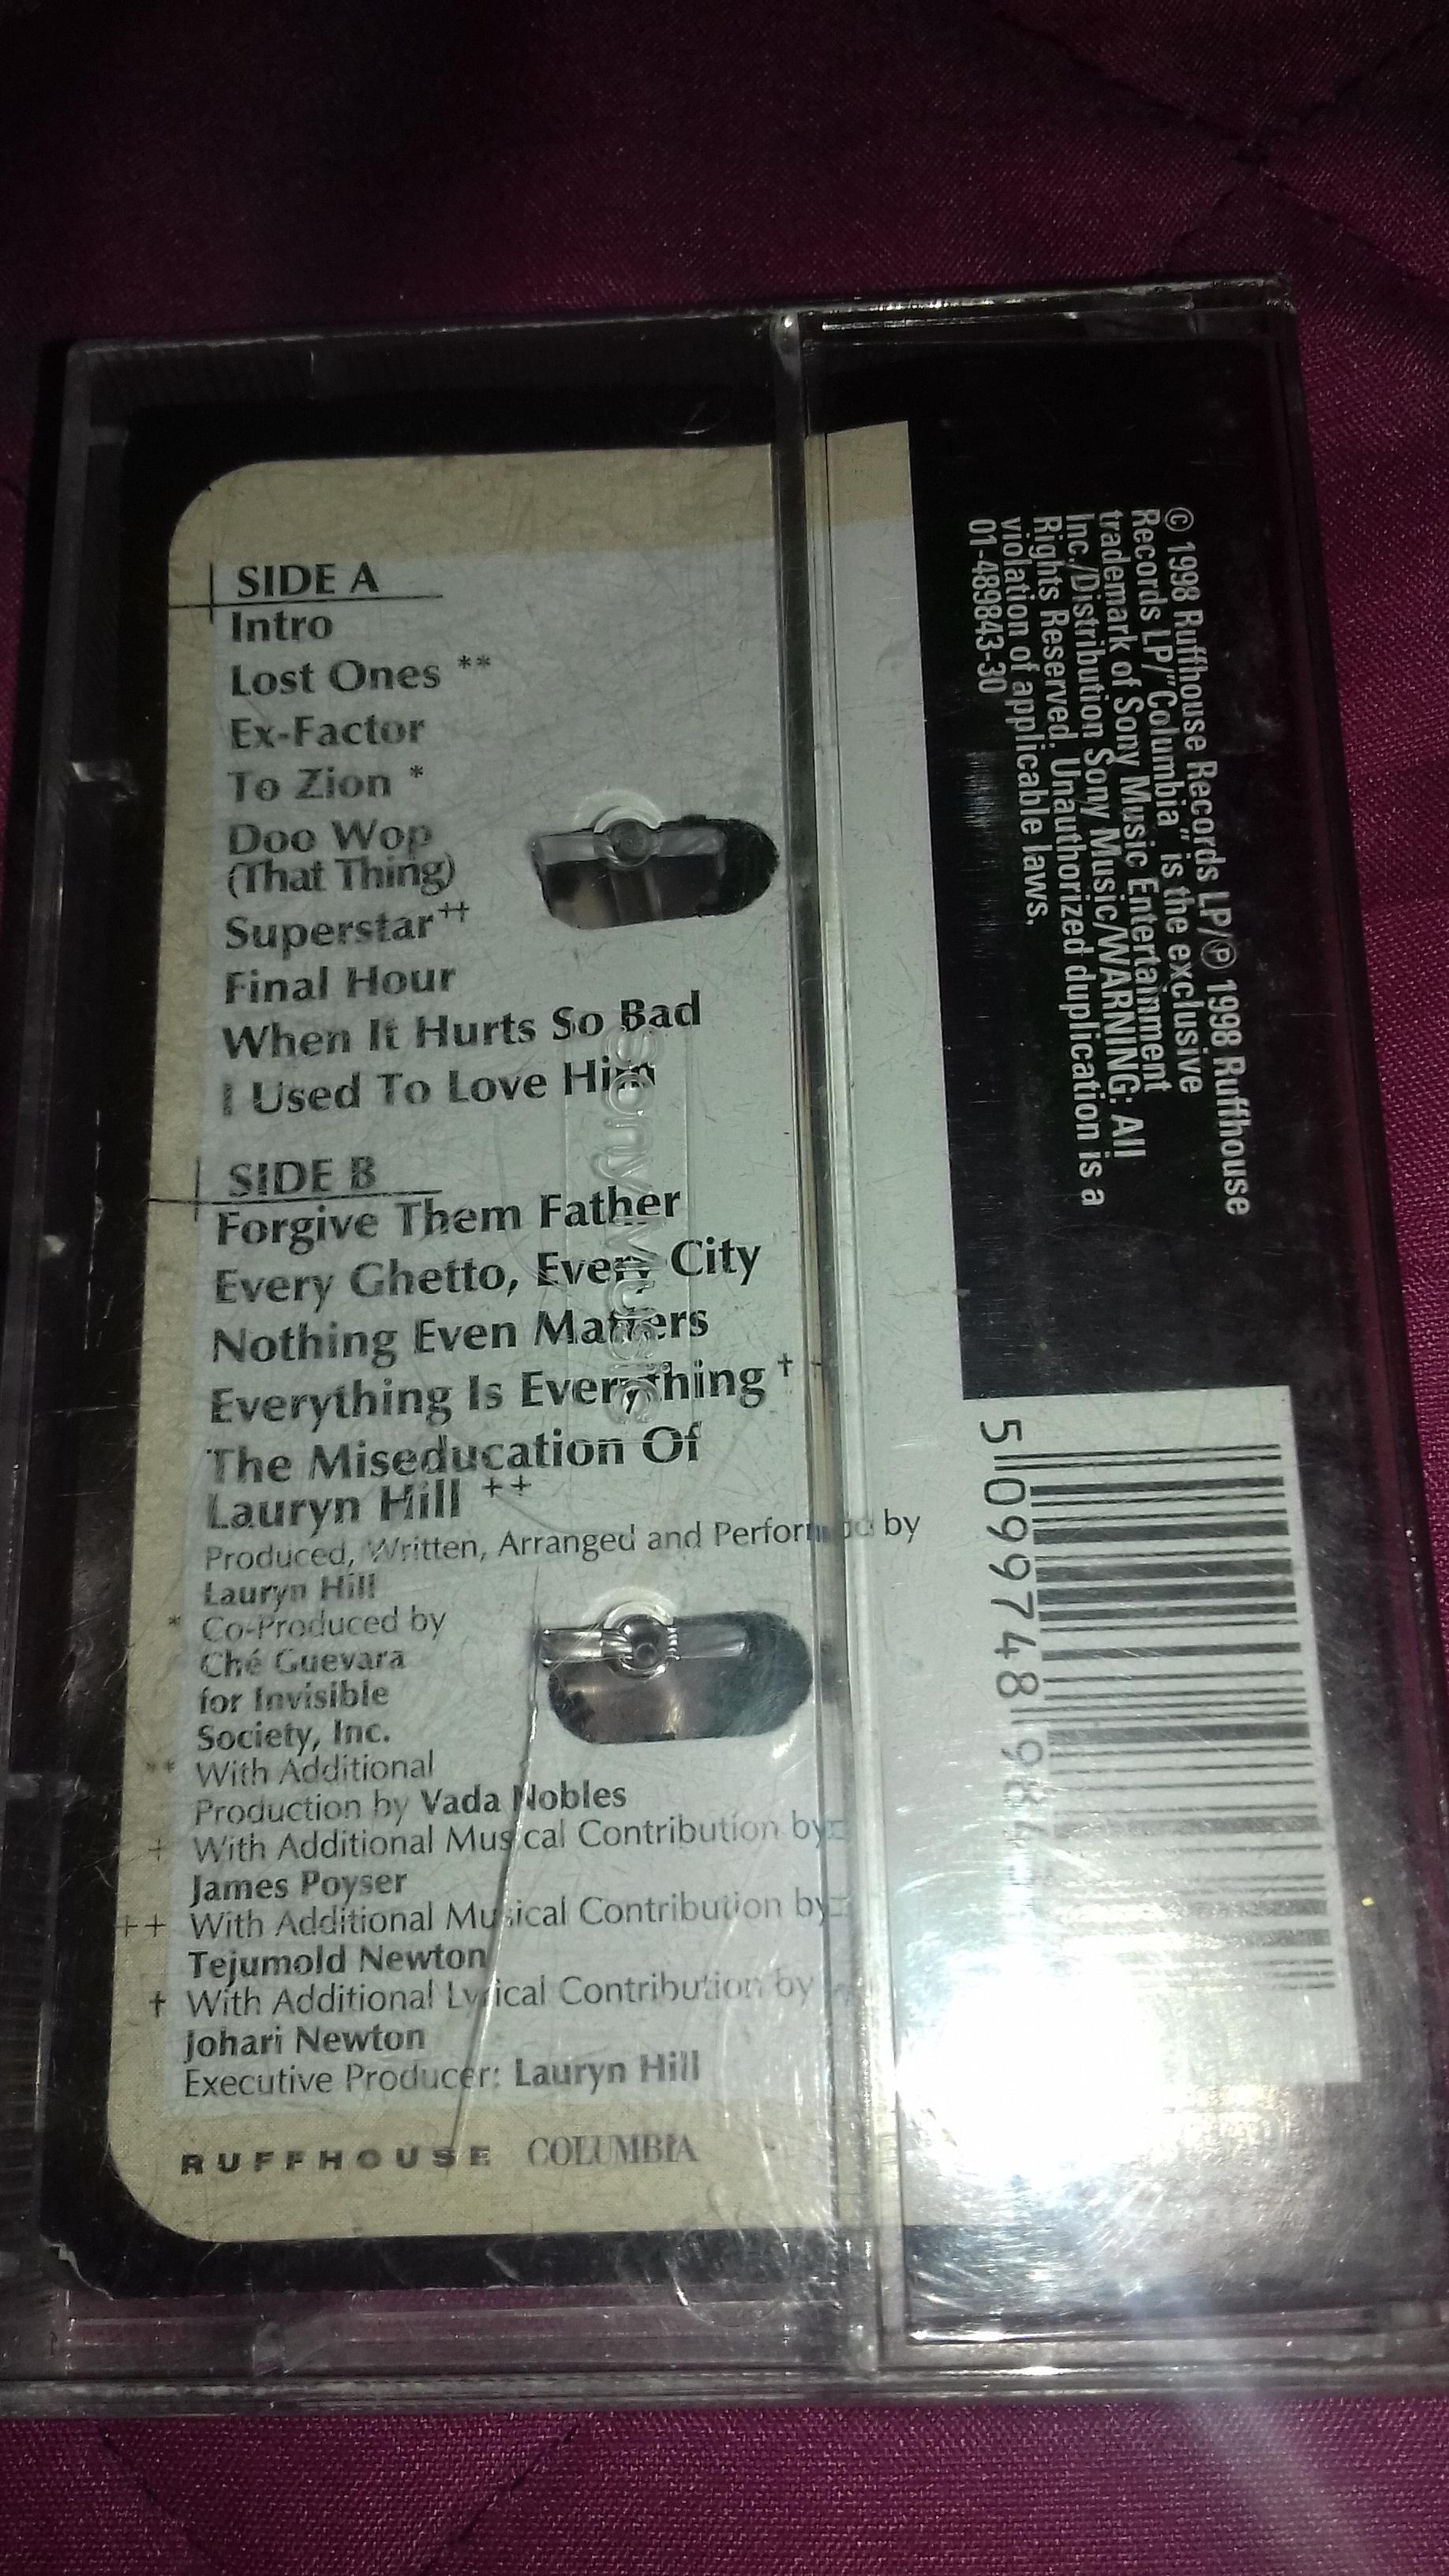 troc de troc cassette audio lauryn hill image 1